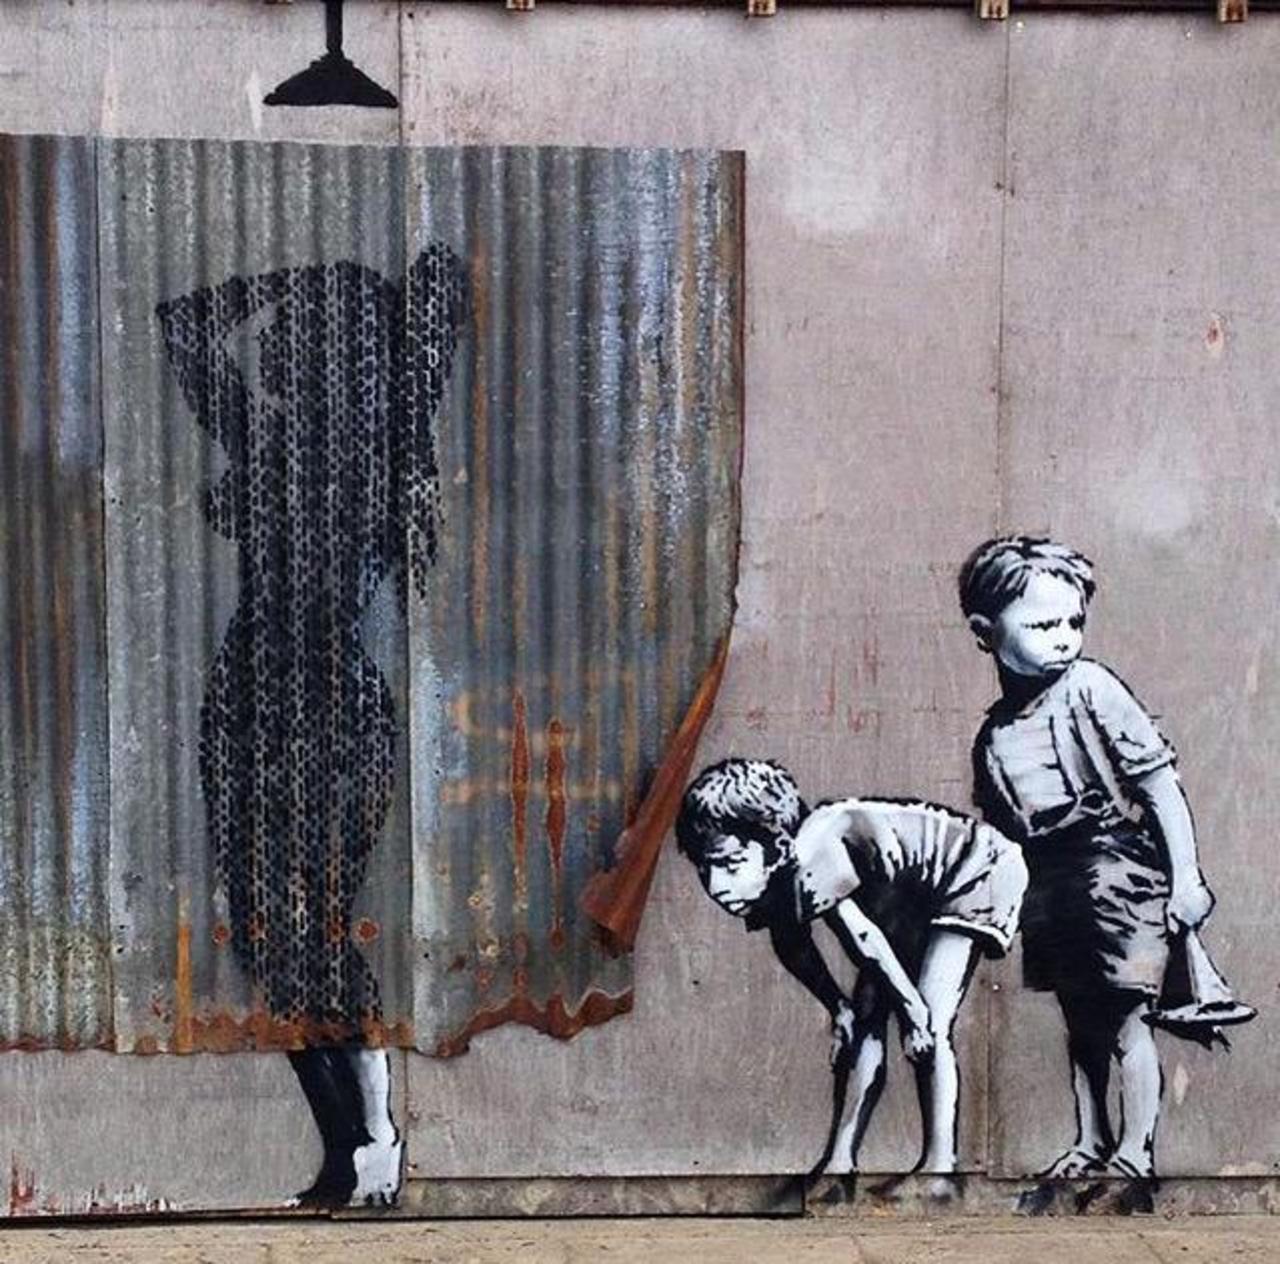 New #Banksy Street Art in Weston-Super-Mare for #Dismaland 

#streetart #banksy #art #graffiti http://t.co/uEbmoM3q45